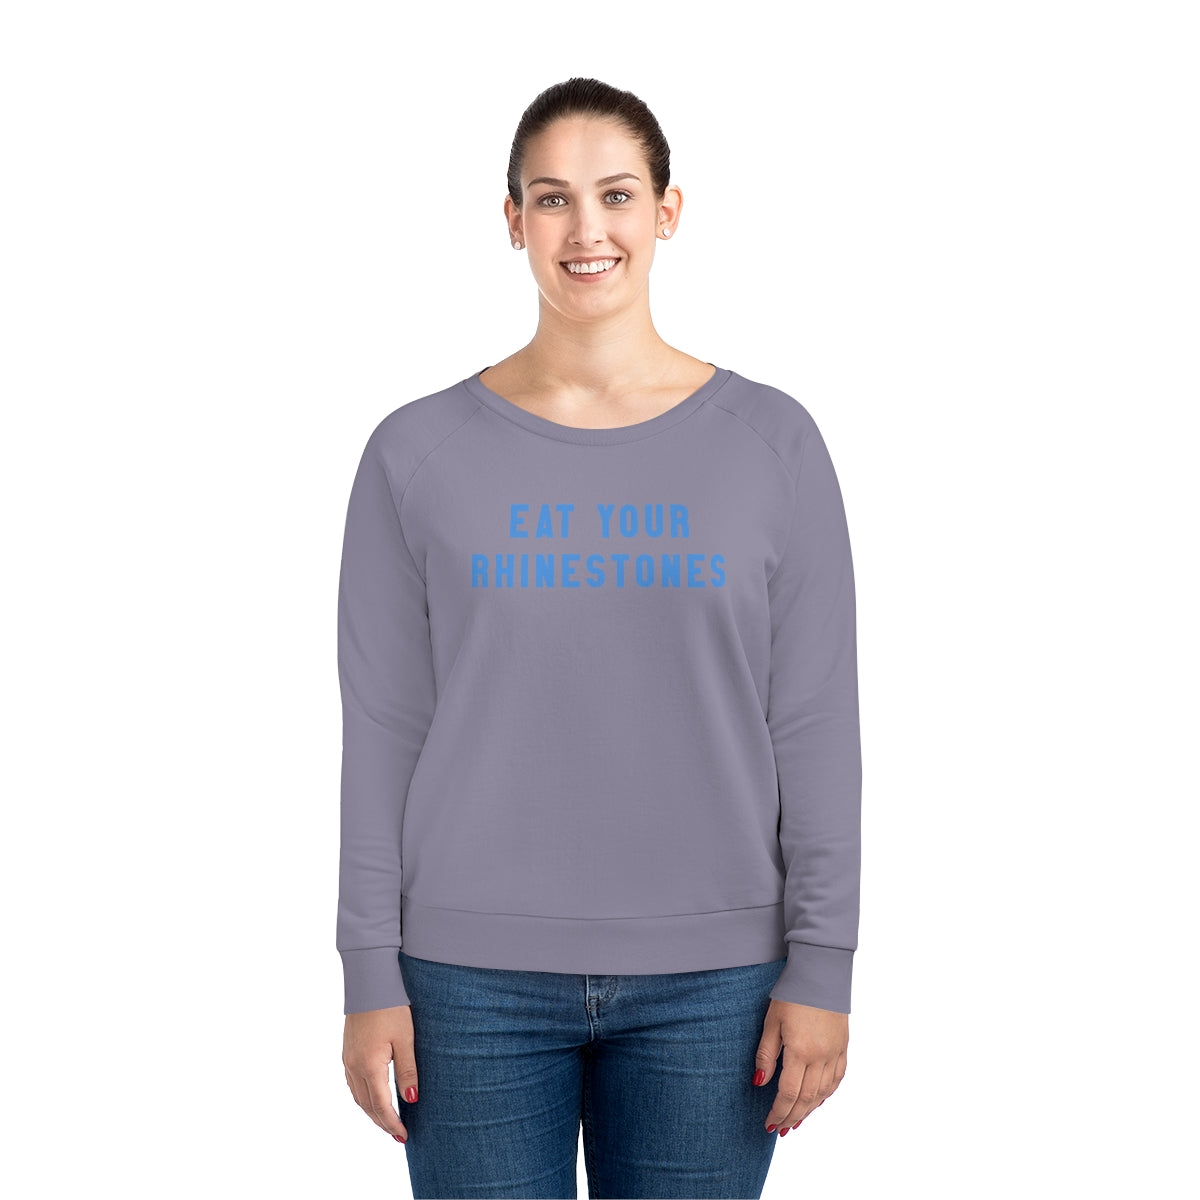 Rhinestones Women's Relaxed Fit Sweatshirt